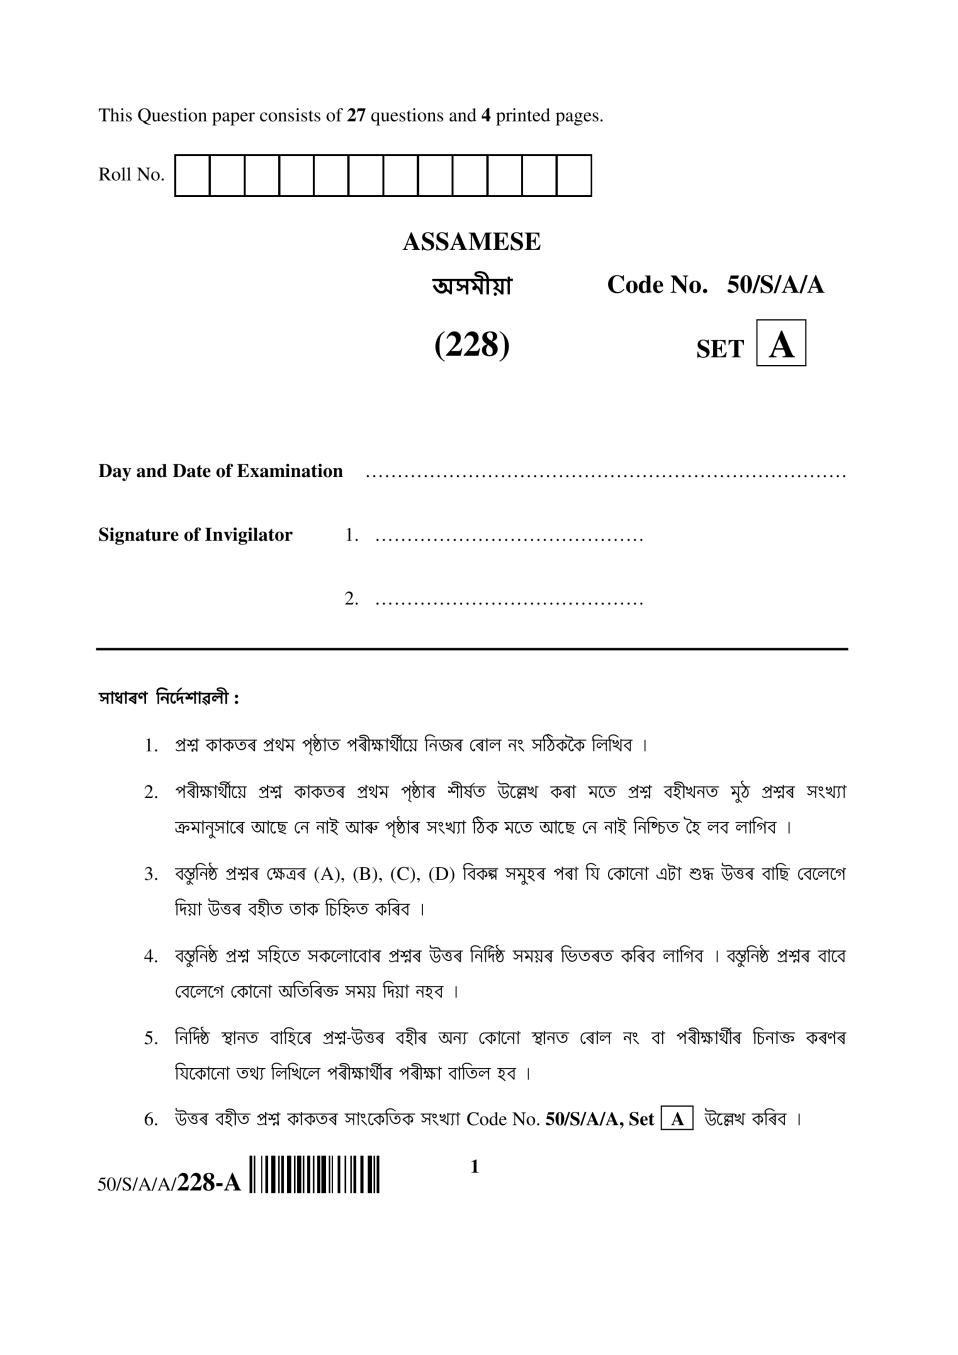 NIOS Class 10 Question Paper Apr 2015 - Assamese - Page 1